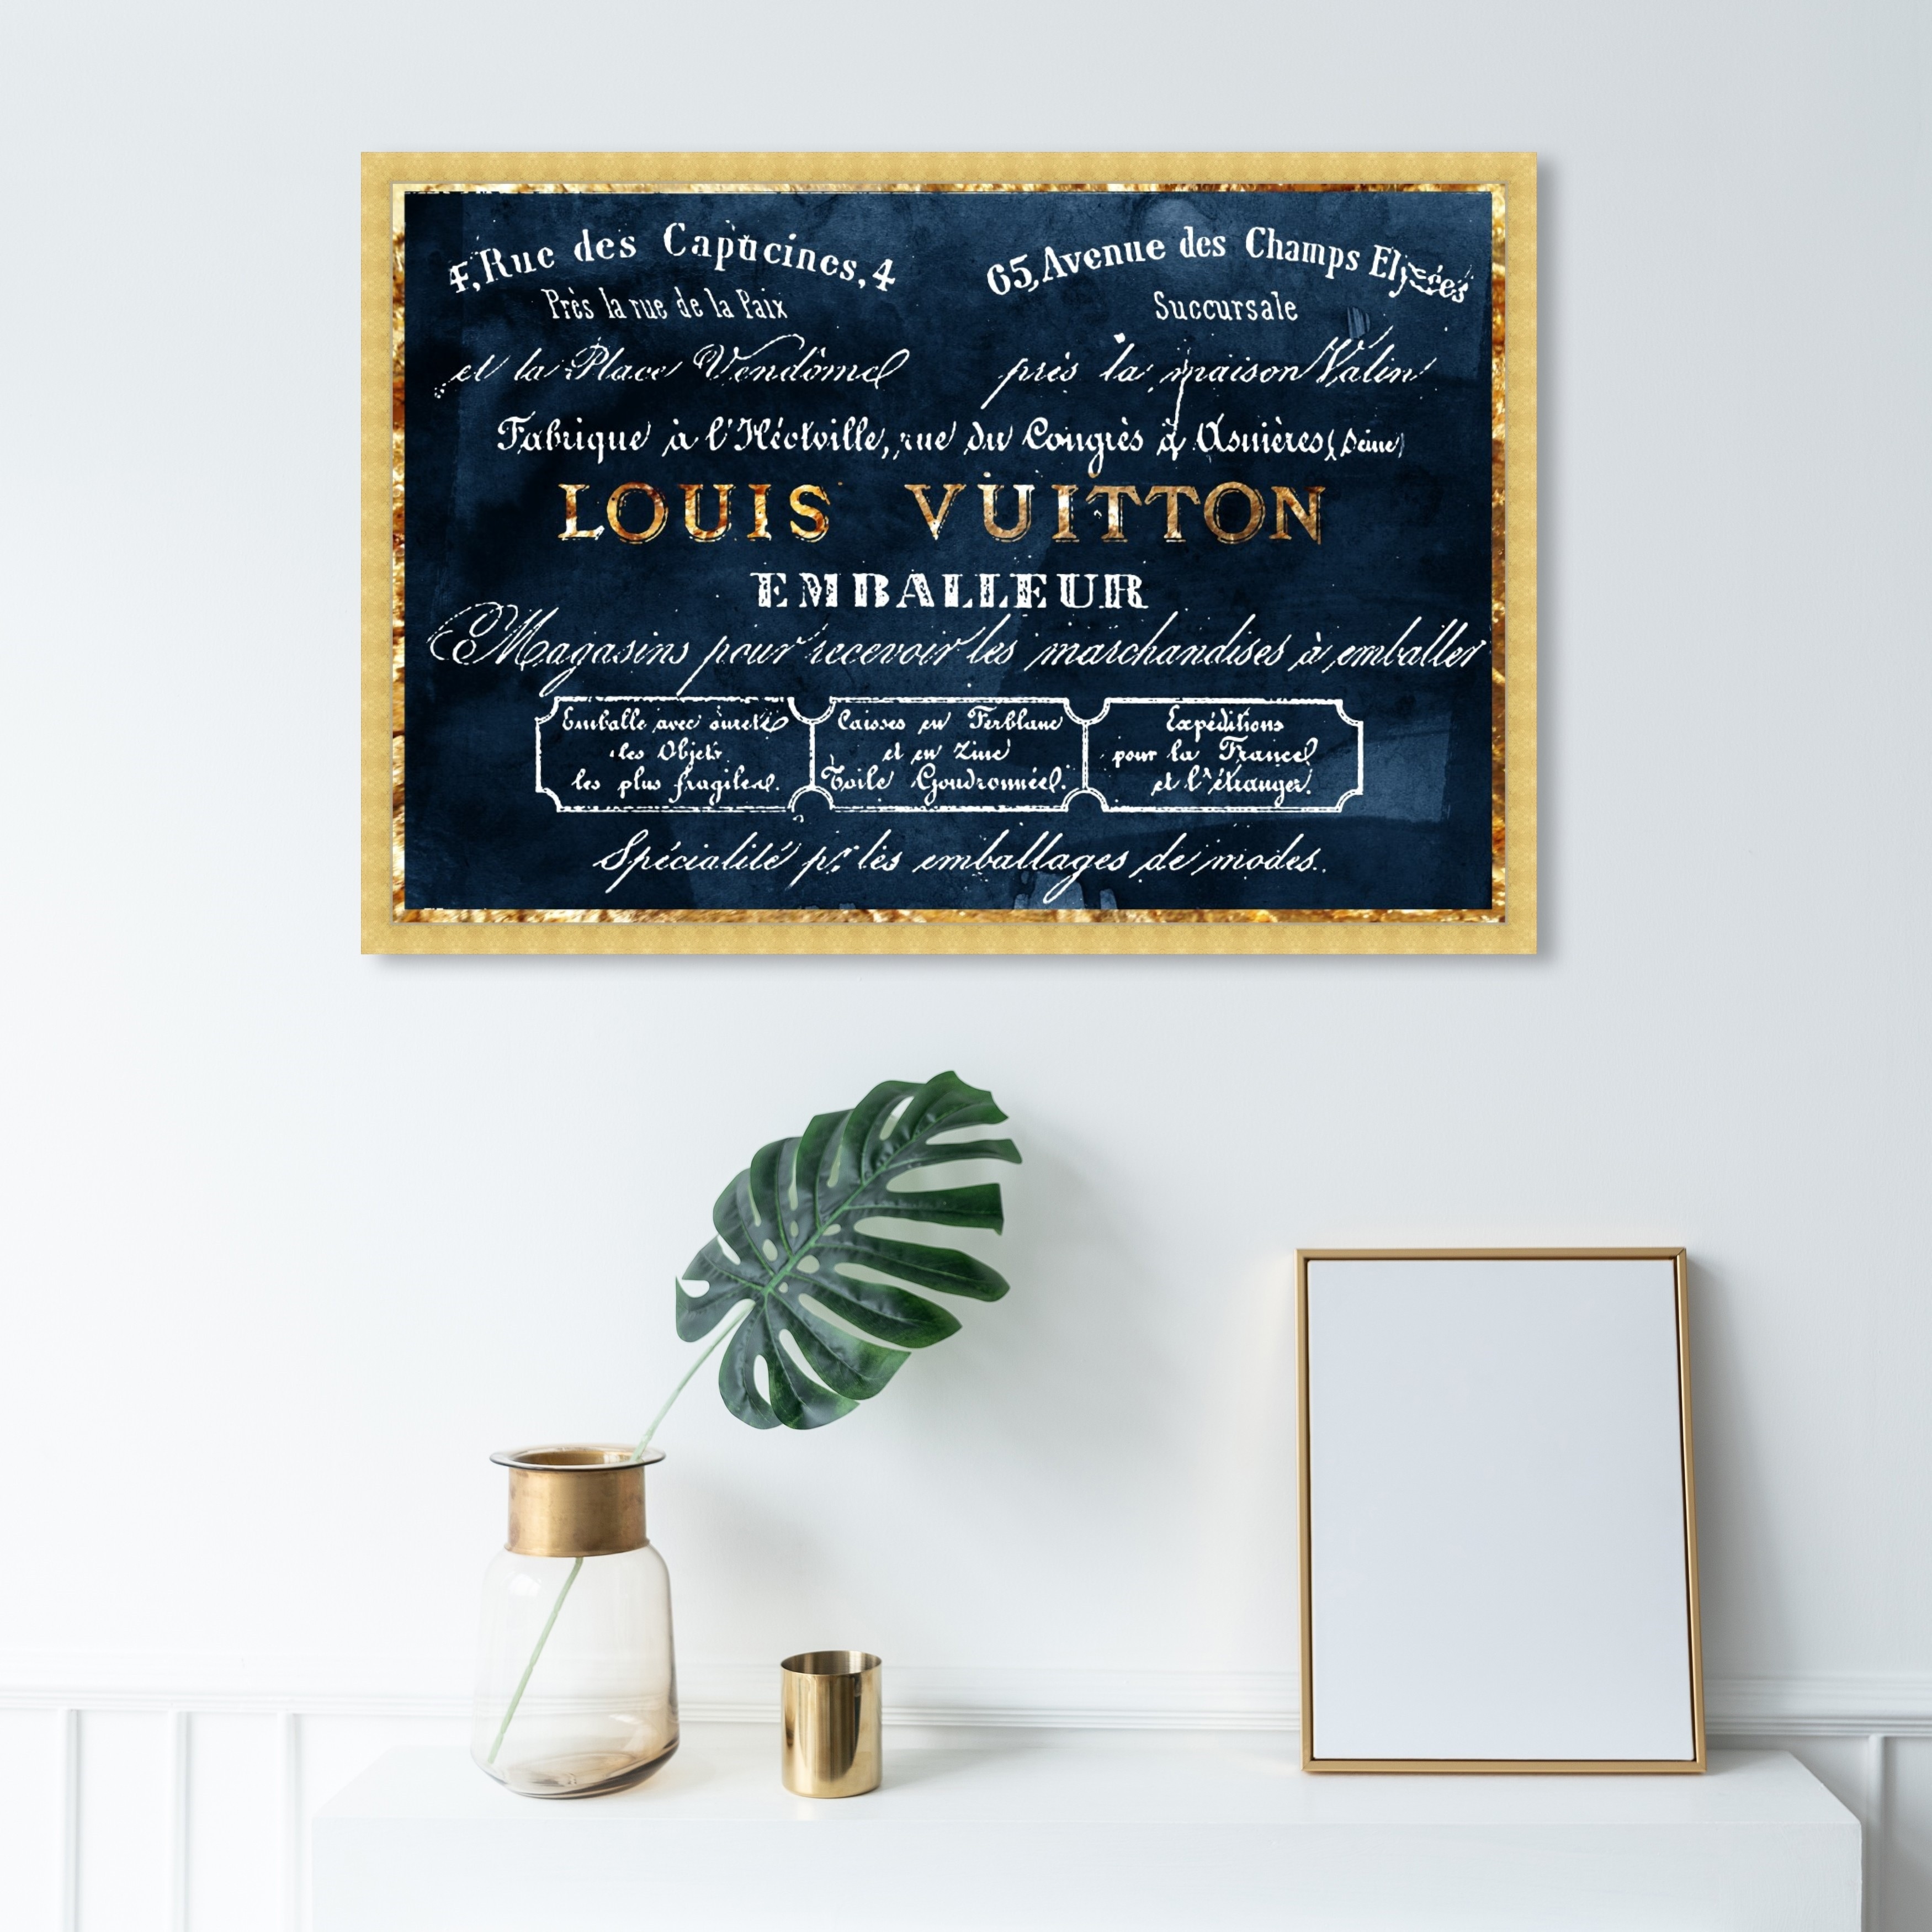 Wall Art Collection - Louis Vuitton Blue